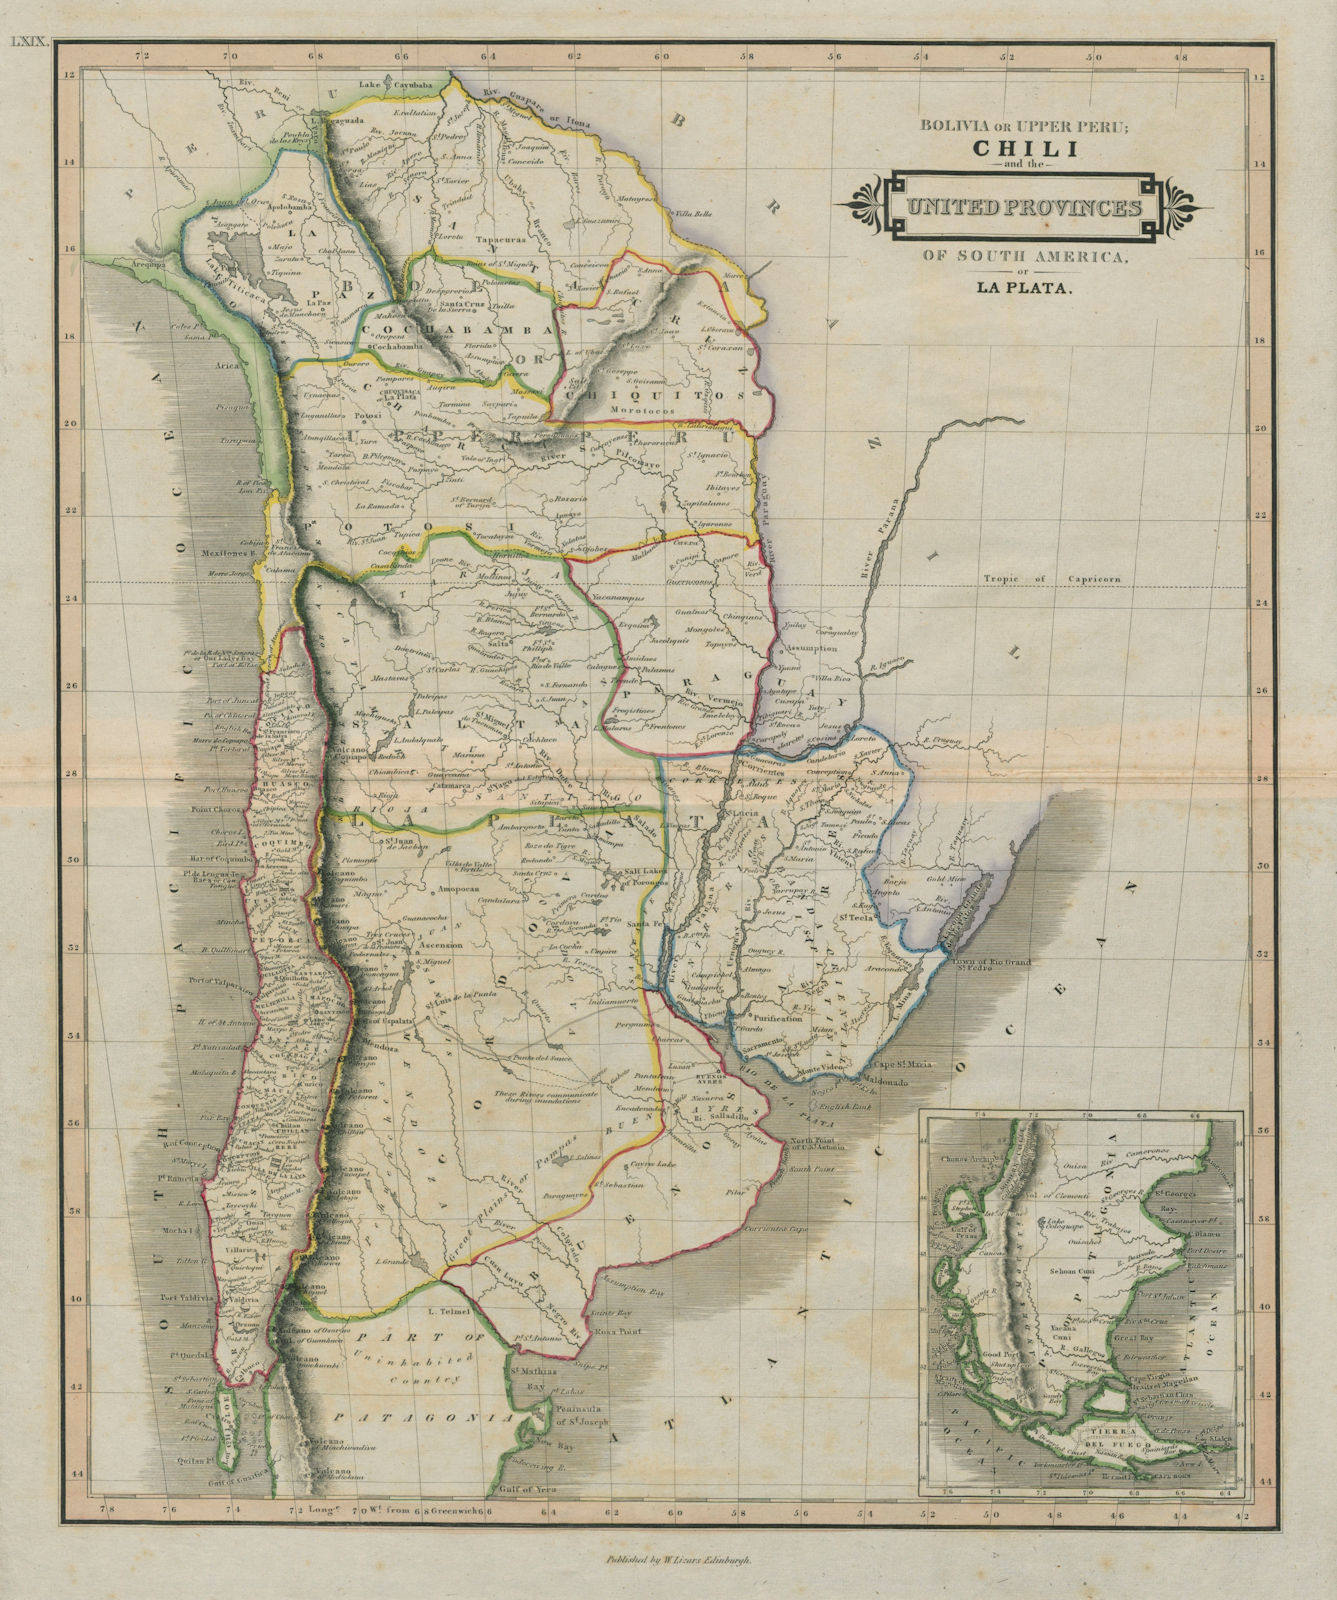 Associate Product Bolivia or Upper Peru. Chili. United Provinces of La Plata. LIZARS 1842 map